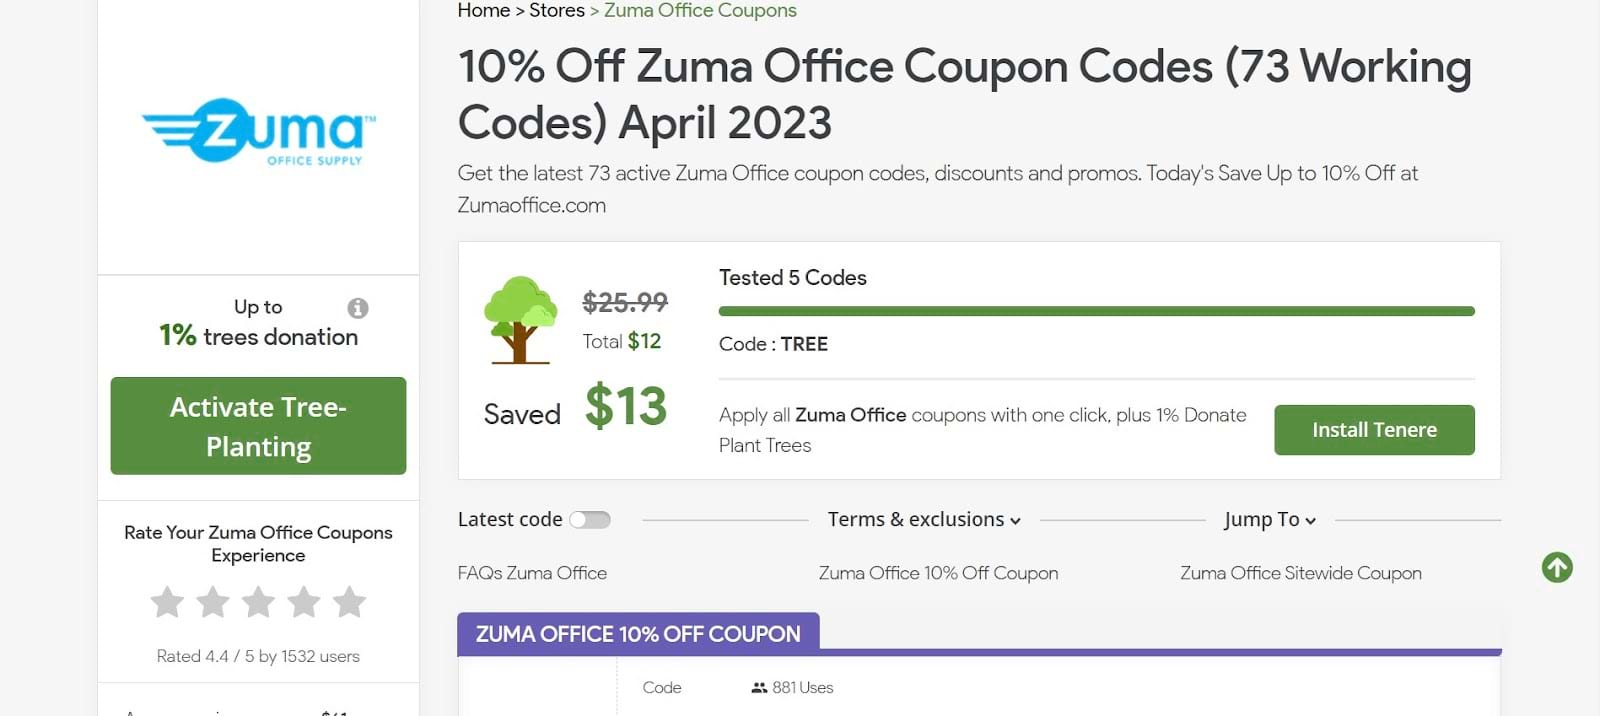 How To Use Zuma Office Promo Code 4